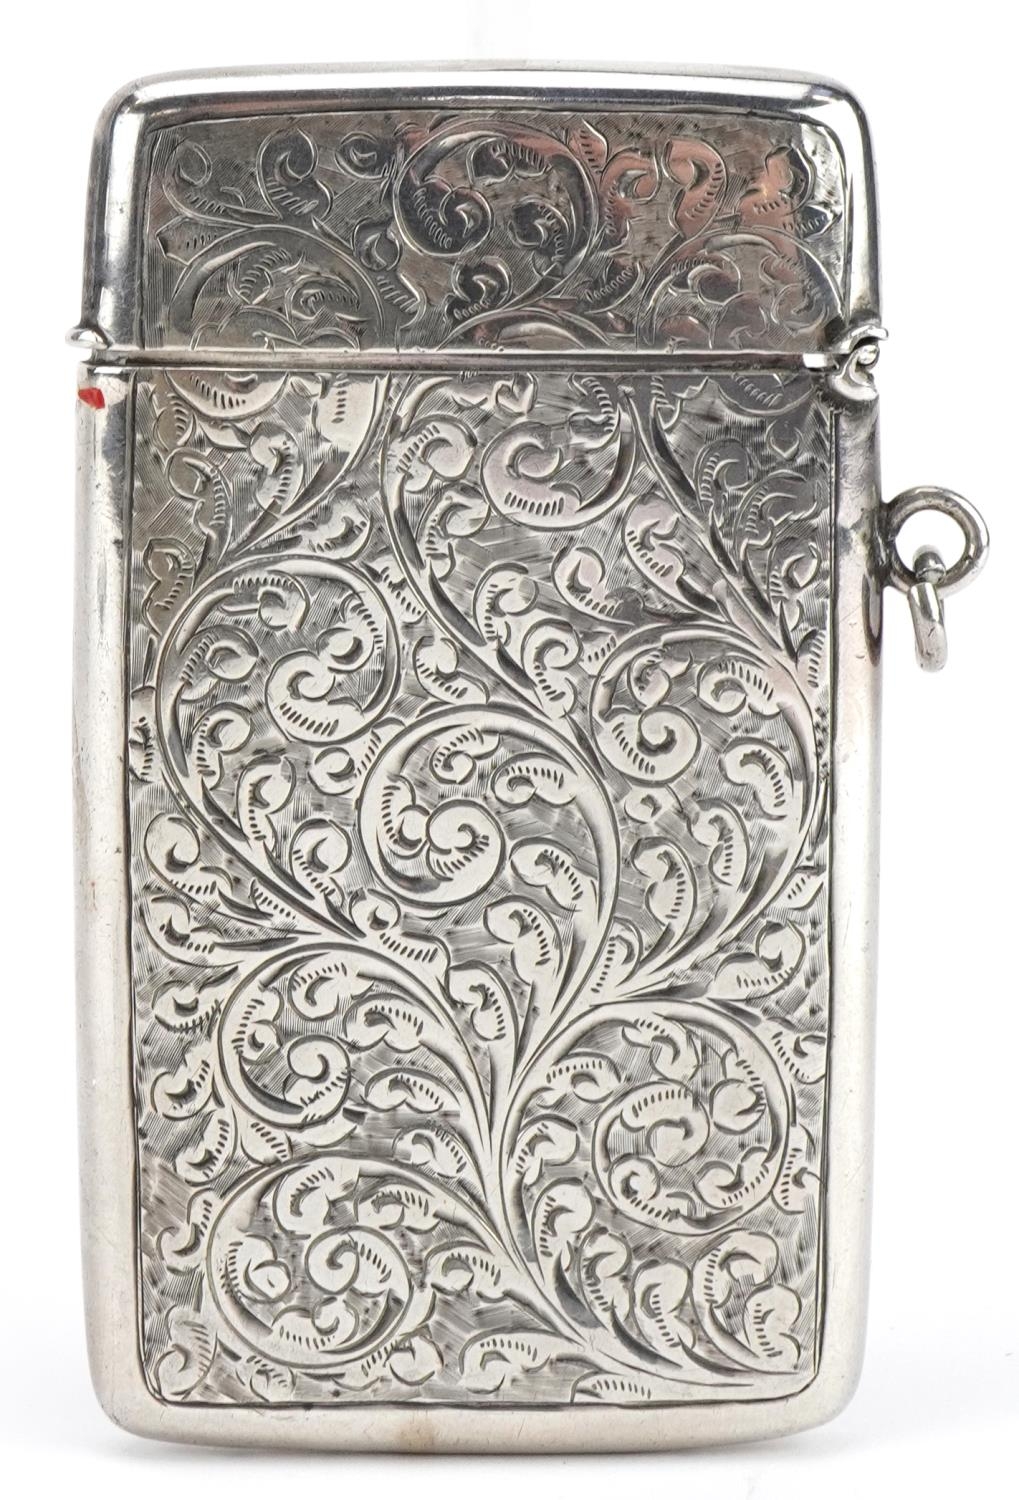 Edwardian silver card case with engraved decoration, indistinct maker's mark, Birmingham 1904, 8.5cm - Image 2 of 4